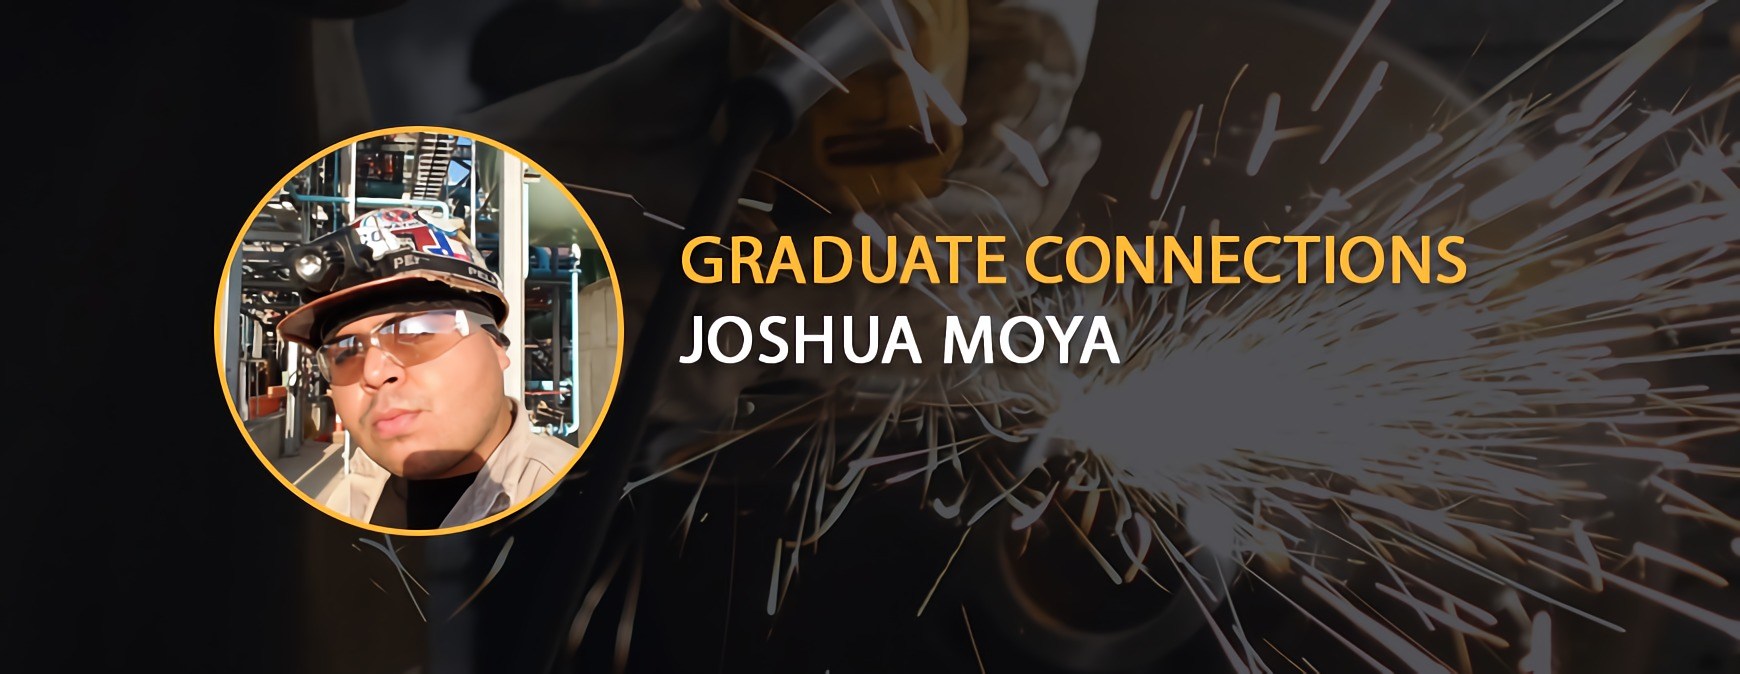 Joshua Moya Graduate Connection